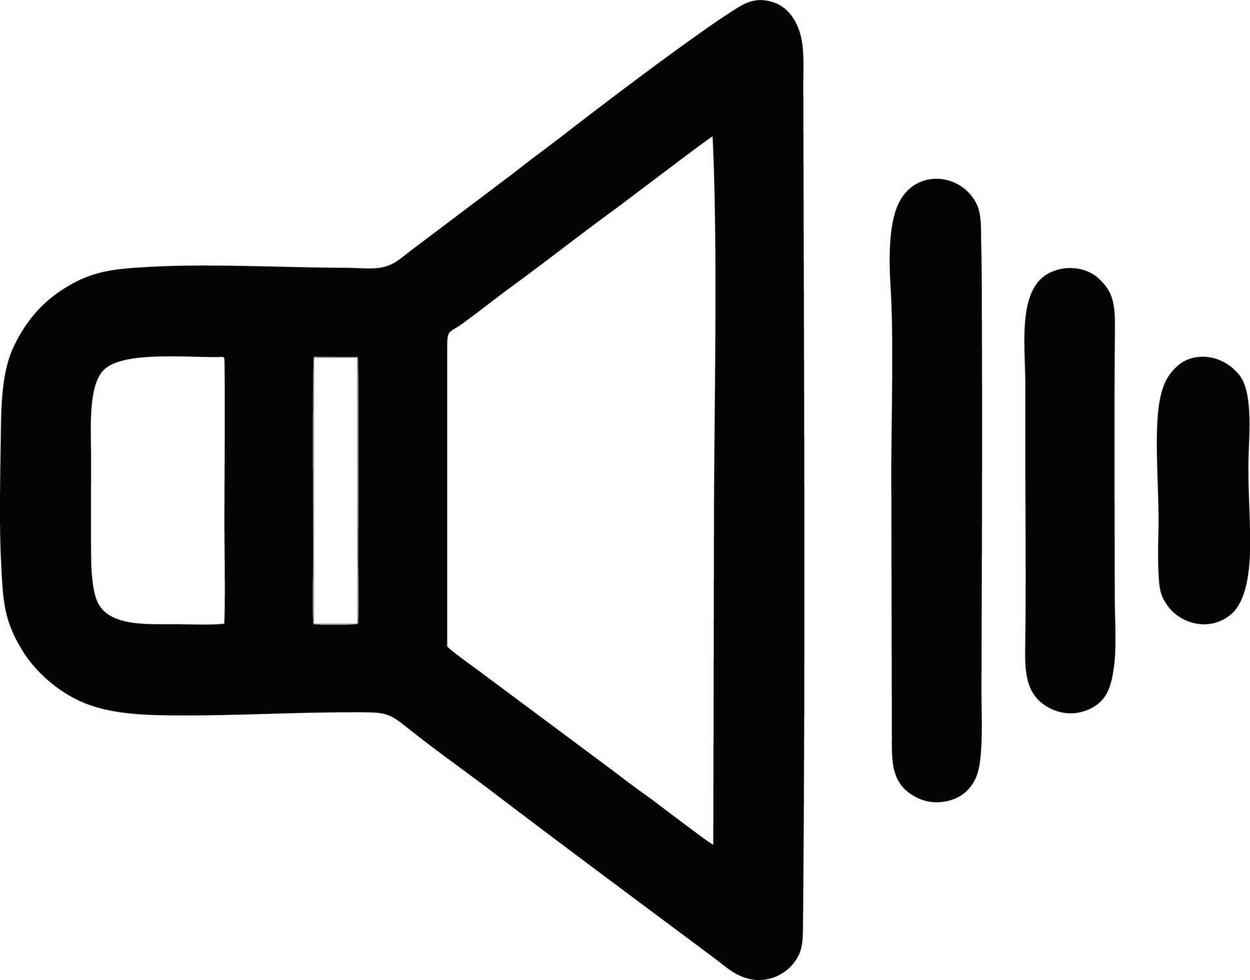 Speaker sound icon symbol on the white background vector